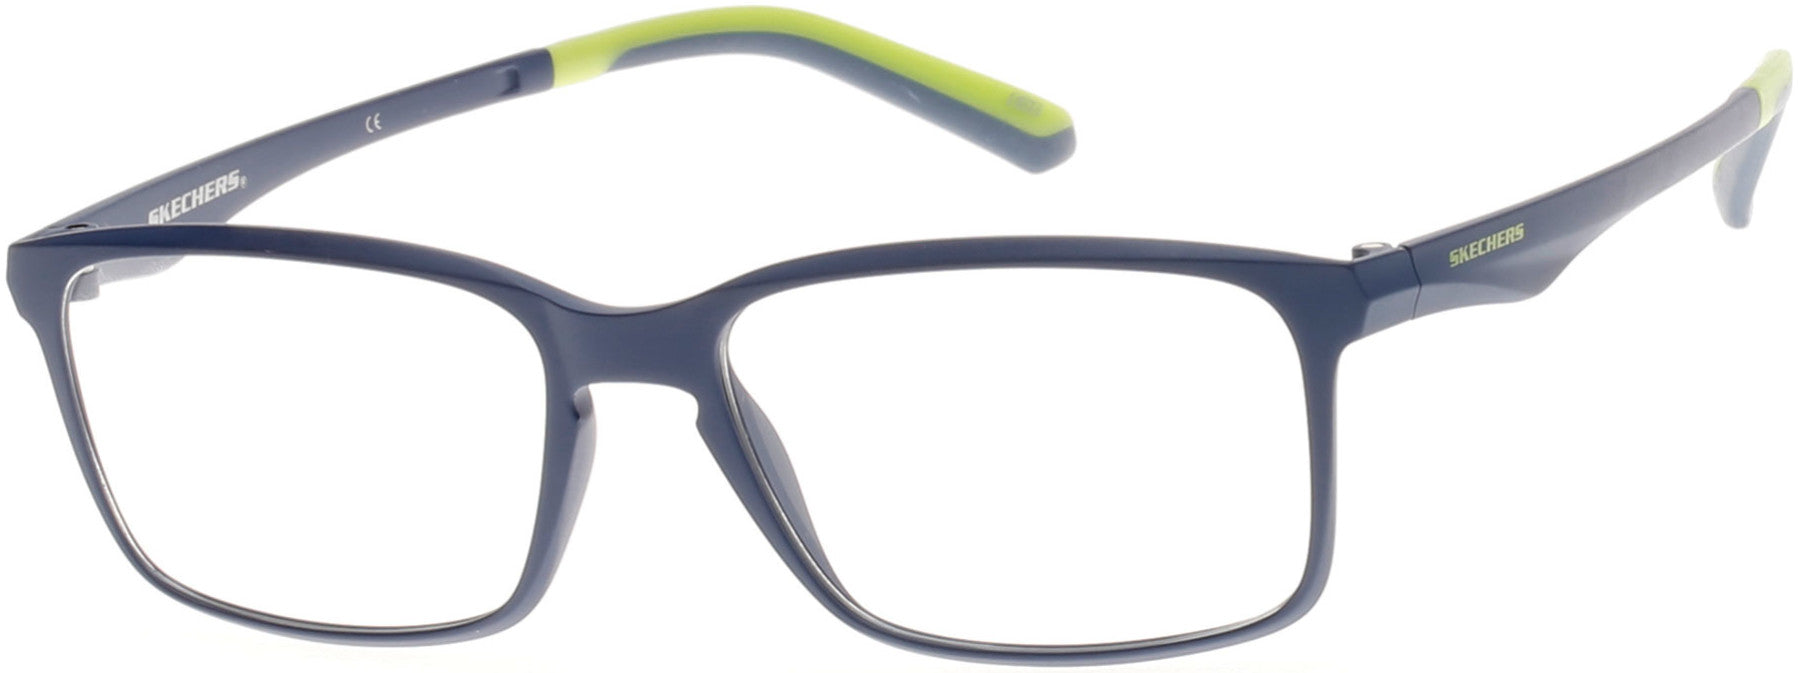 Skechers SE3153 Eyeglasses 091-091 - Matte Blue